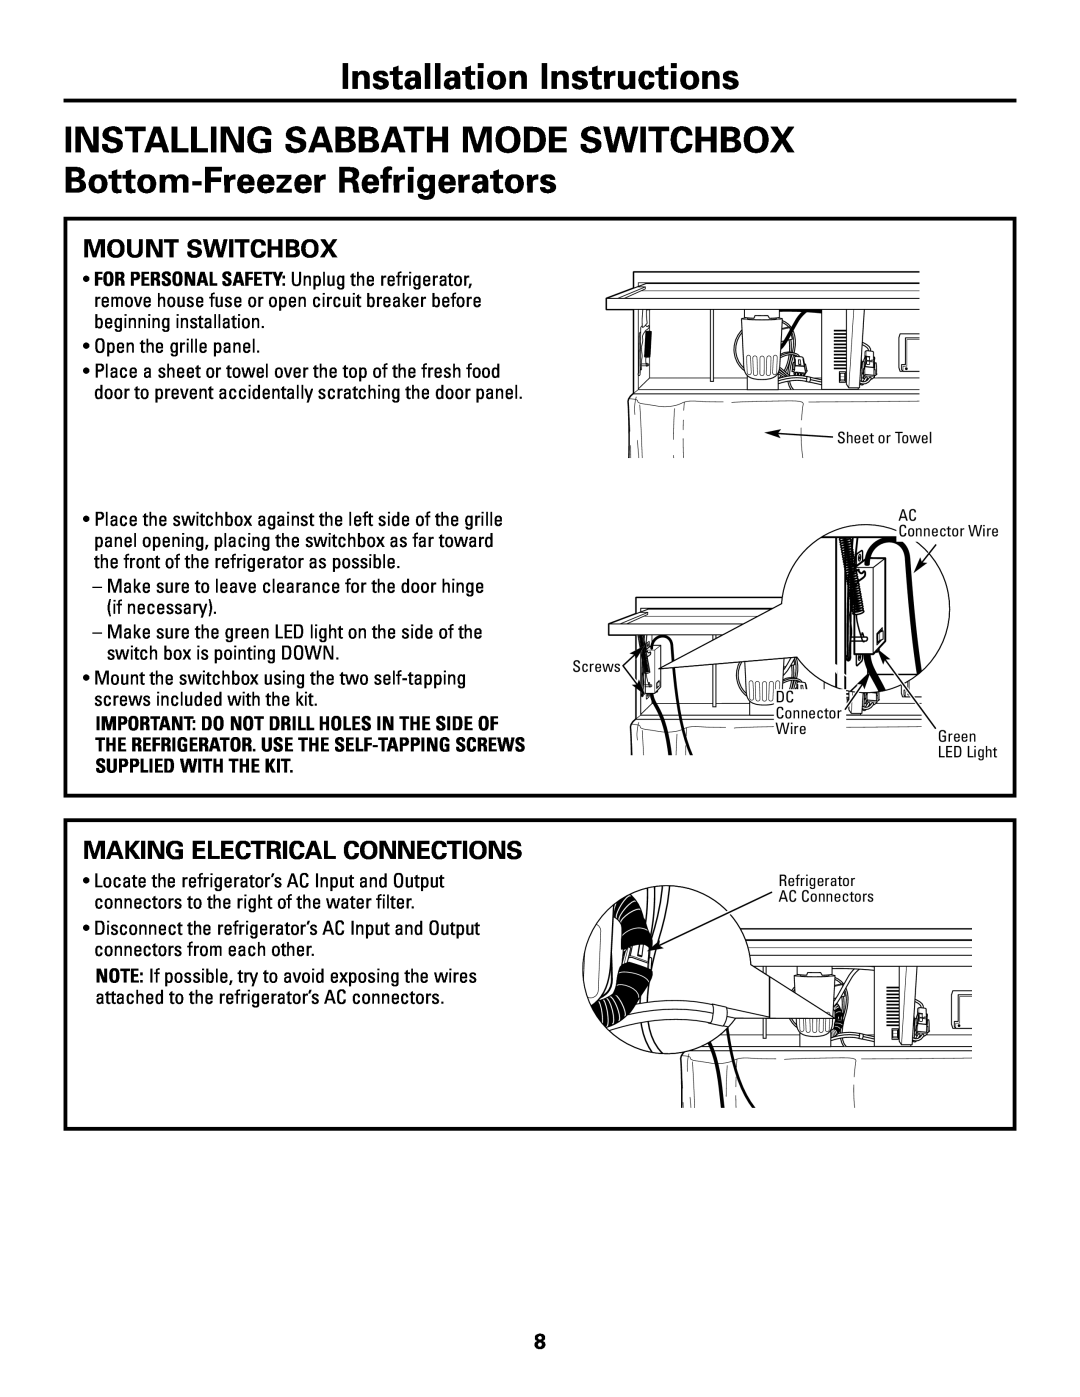 GE Monogram ZSAB1 INSTALLING SABBATH MODE SWITCHBOX Bottom-Freezer Refrigerators, Installation Instructions, AC Connectors 